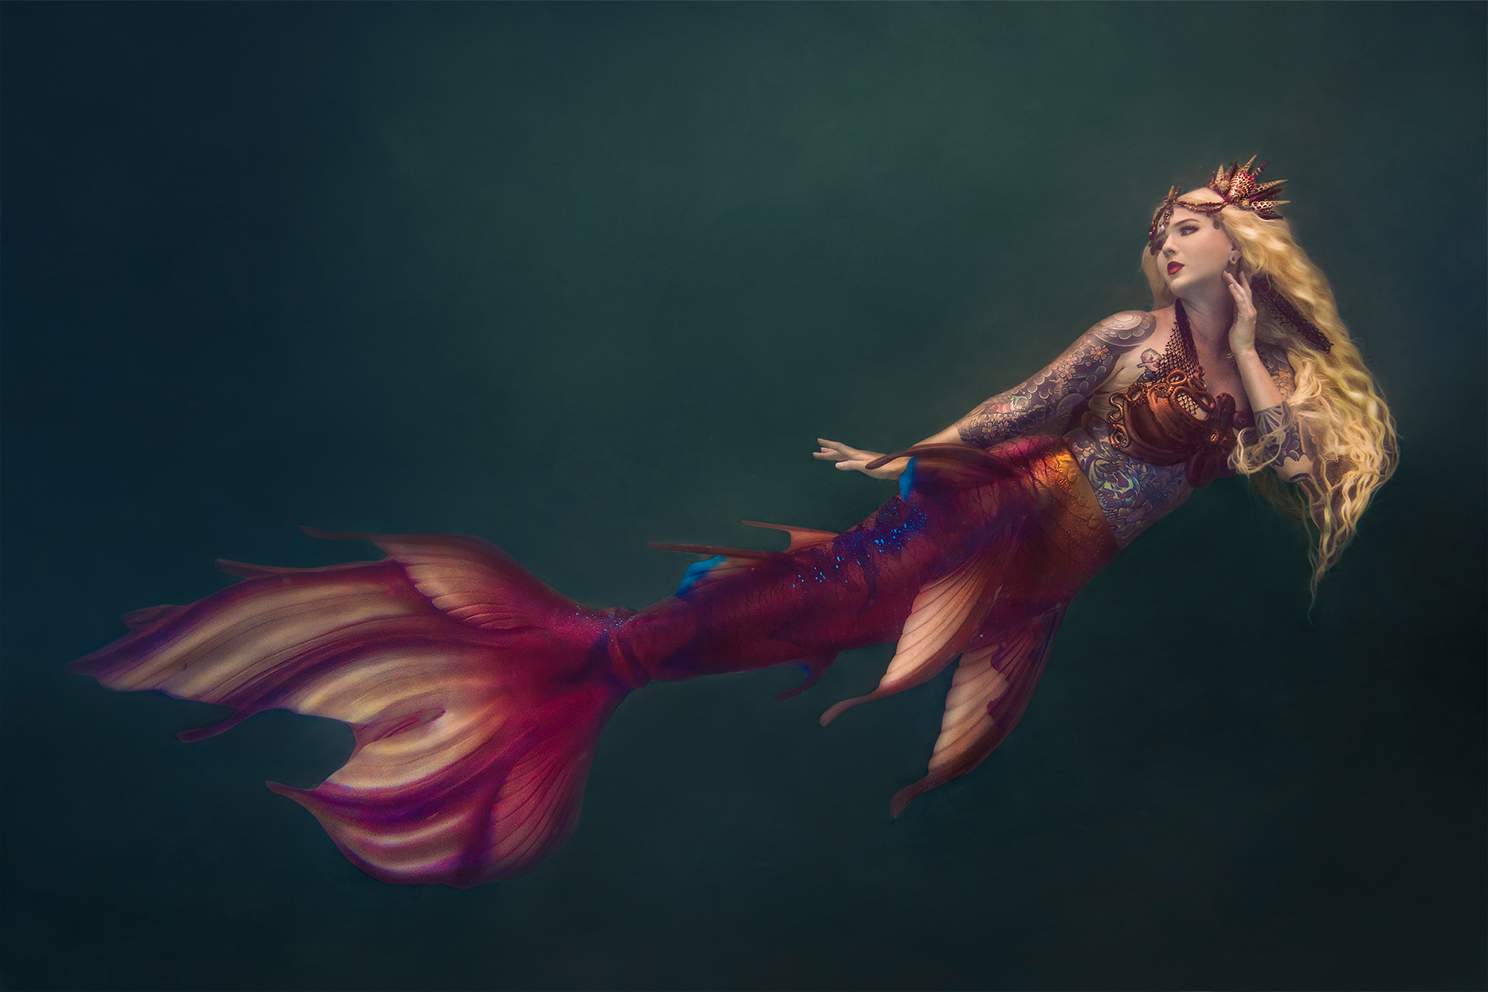 underwater photographer florida